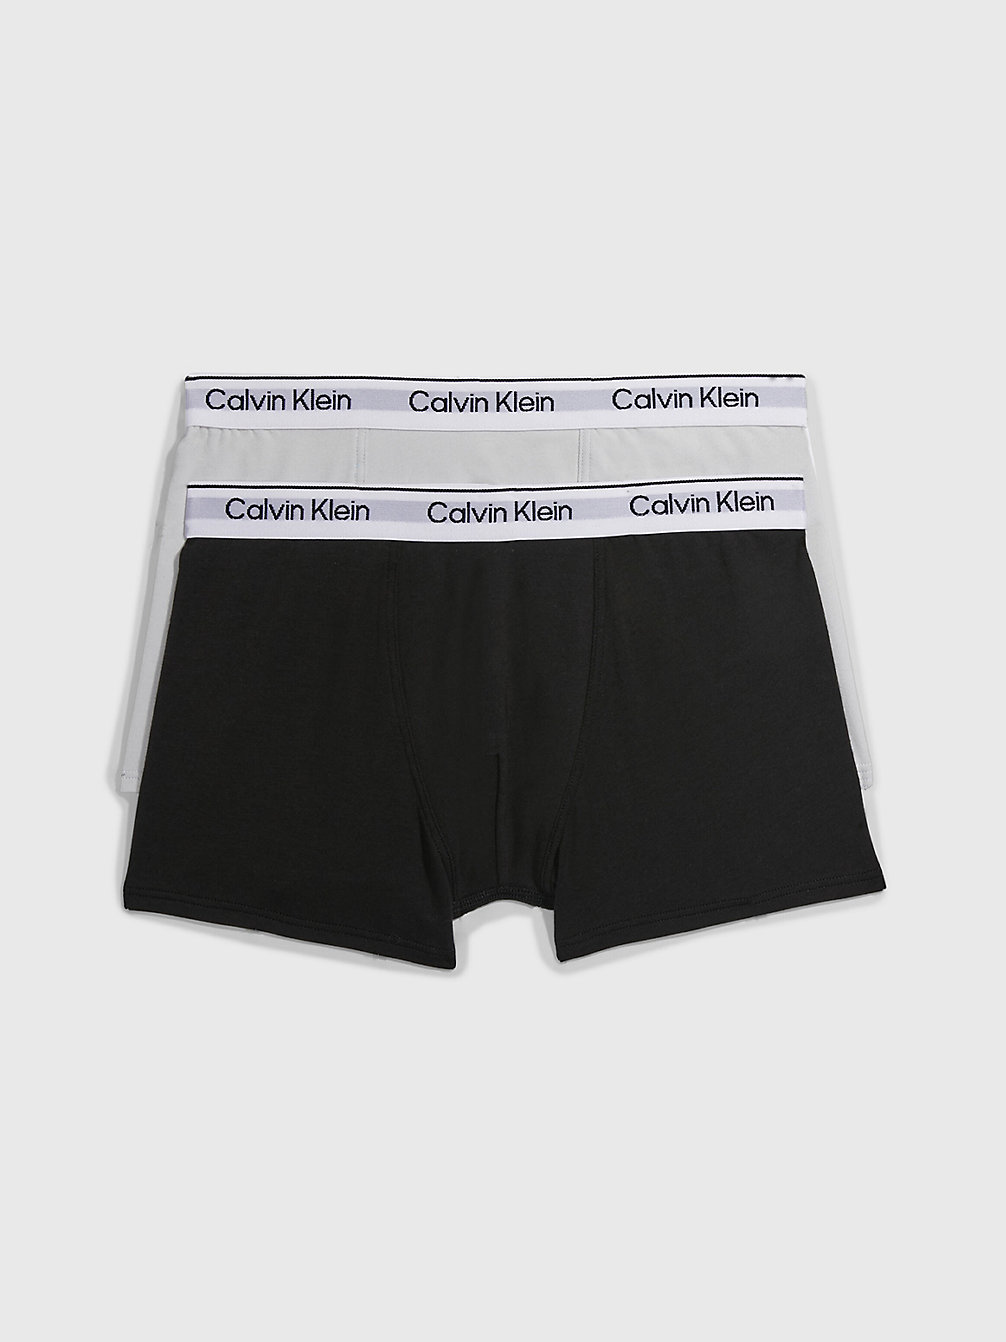 STONEGREY/PVHBLACK > 2-Pack Jongensbroeken - Modern Cotton > undefined boys - Calvin Klein